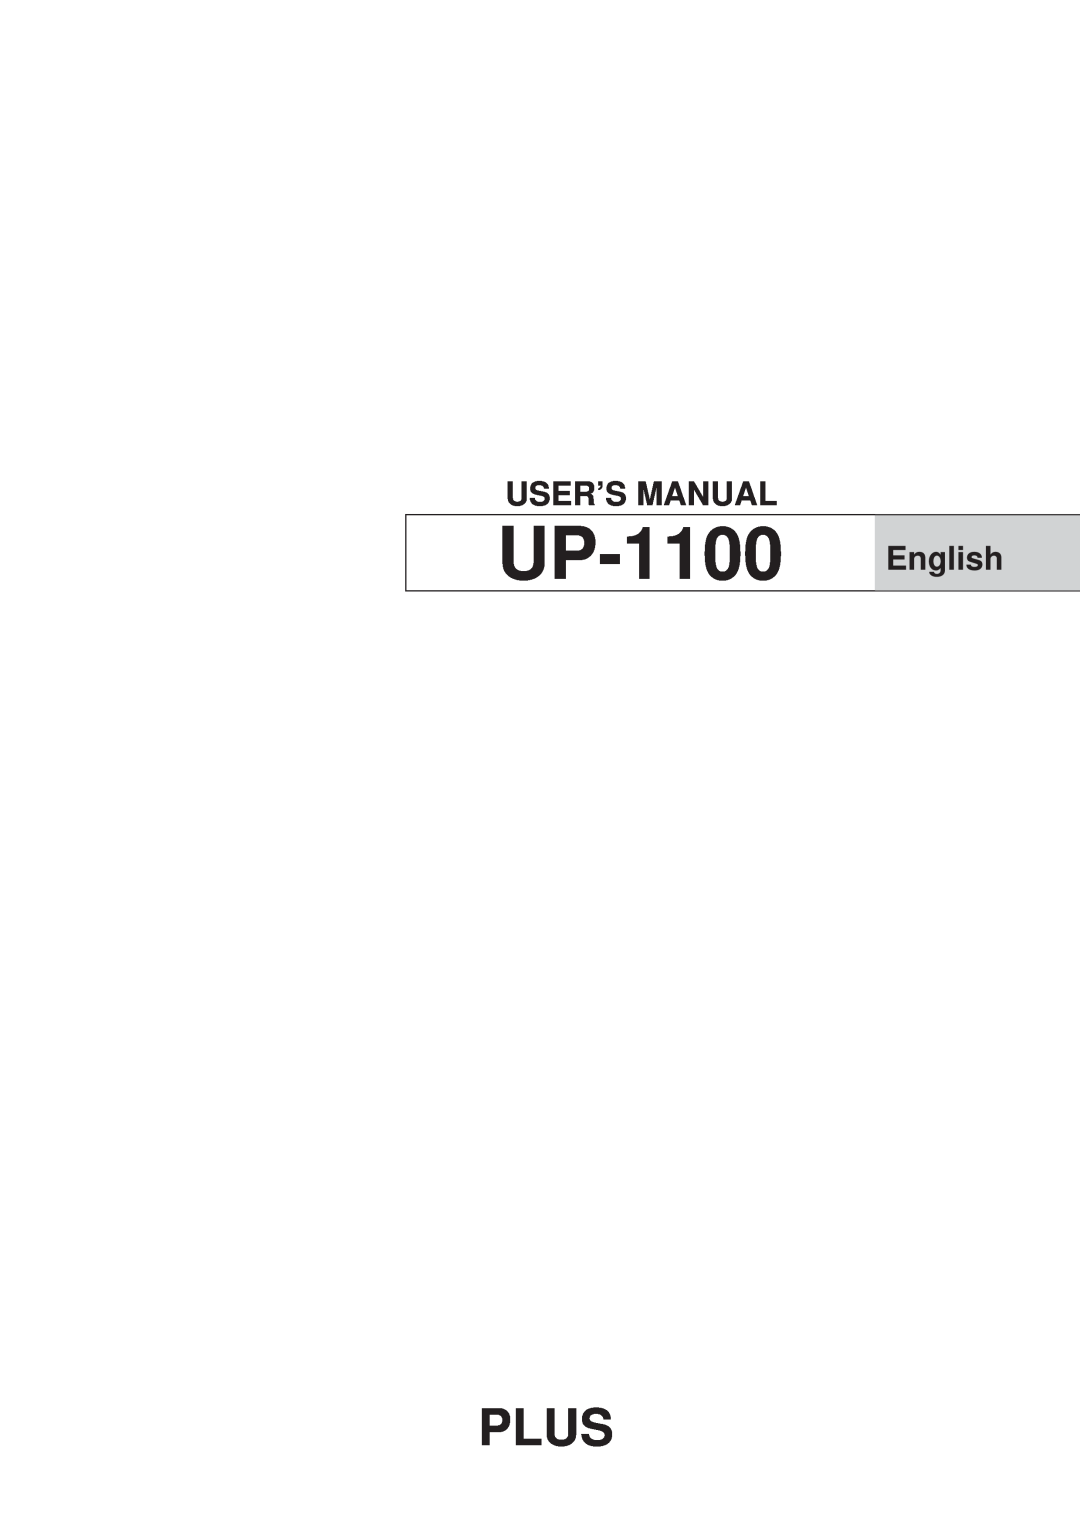 Plus user manual UP-1100 English, Plus, User’S Manual 